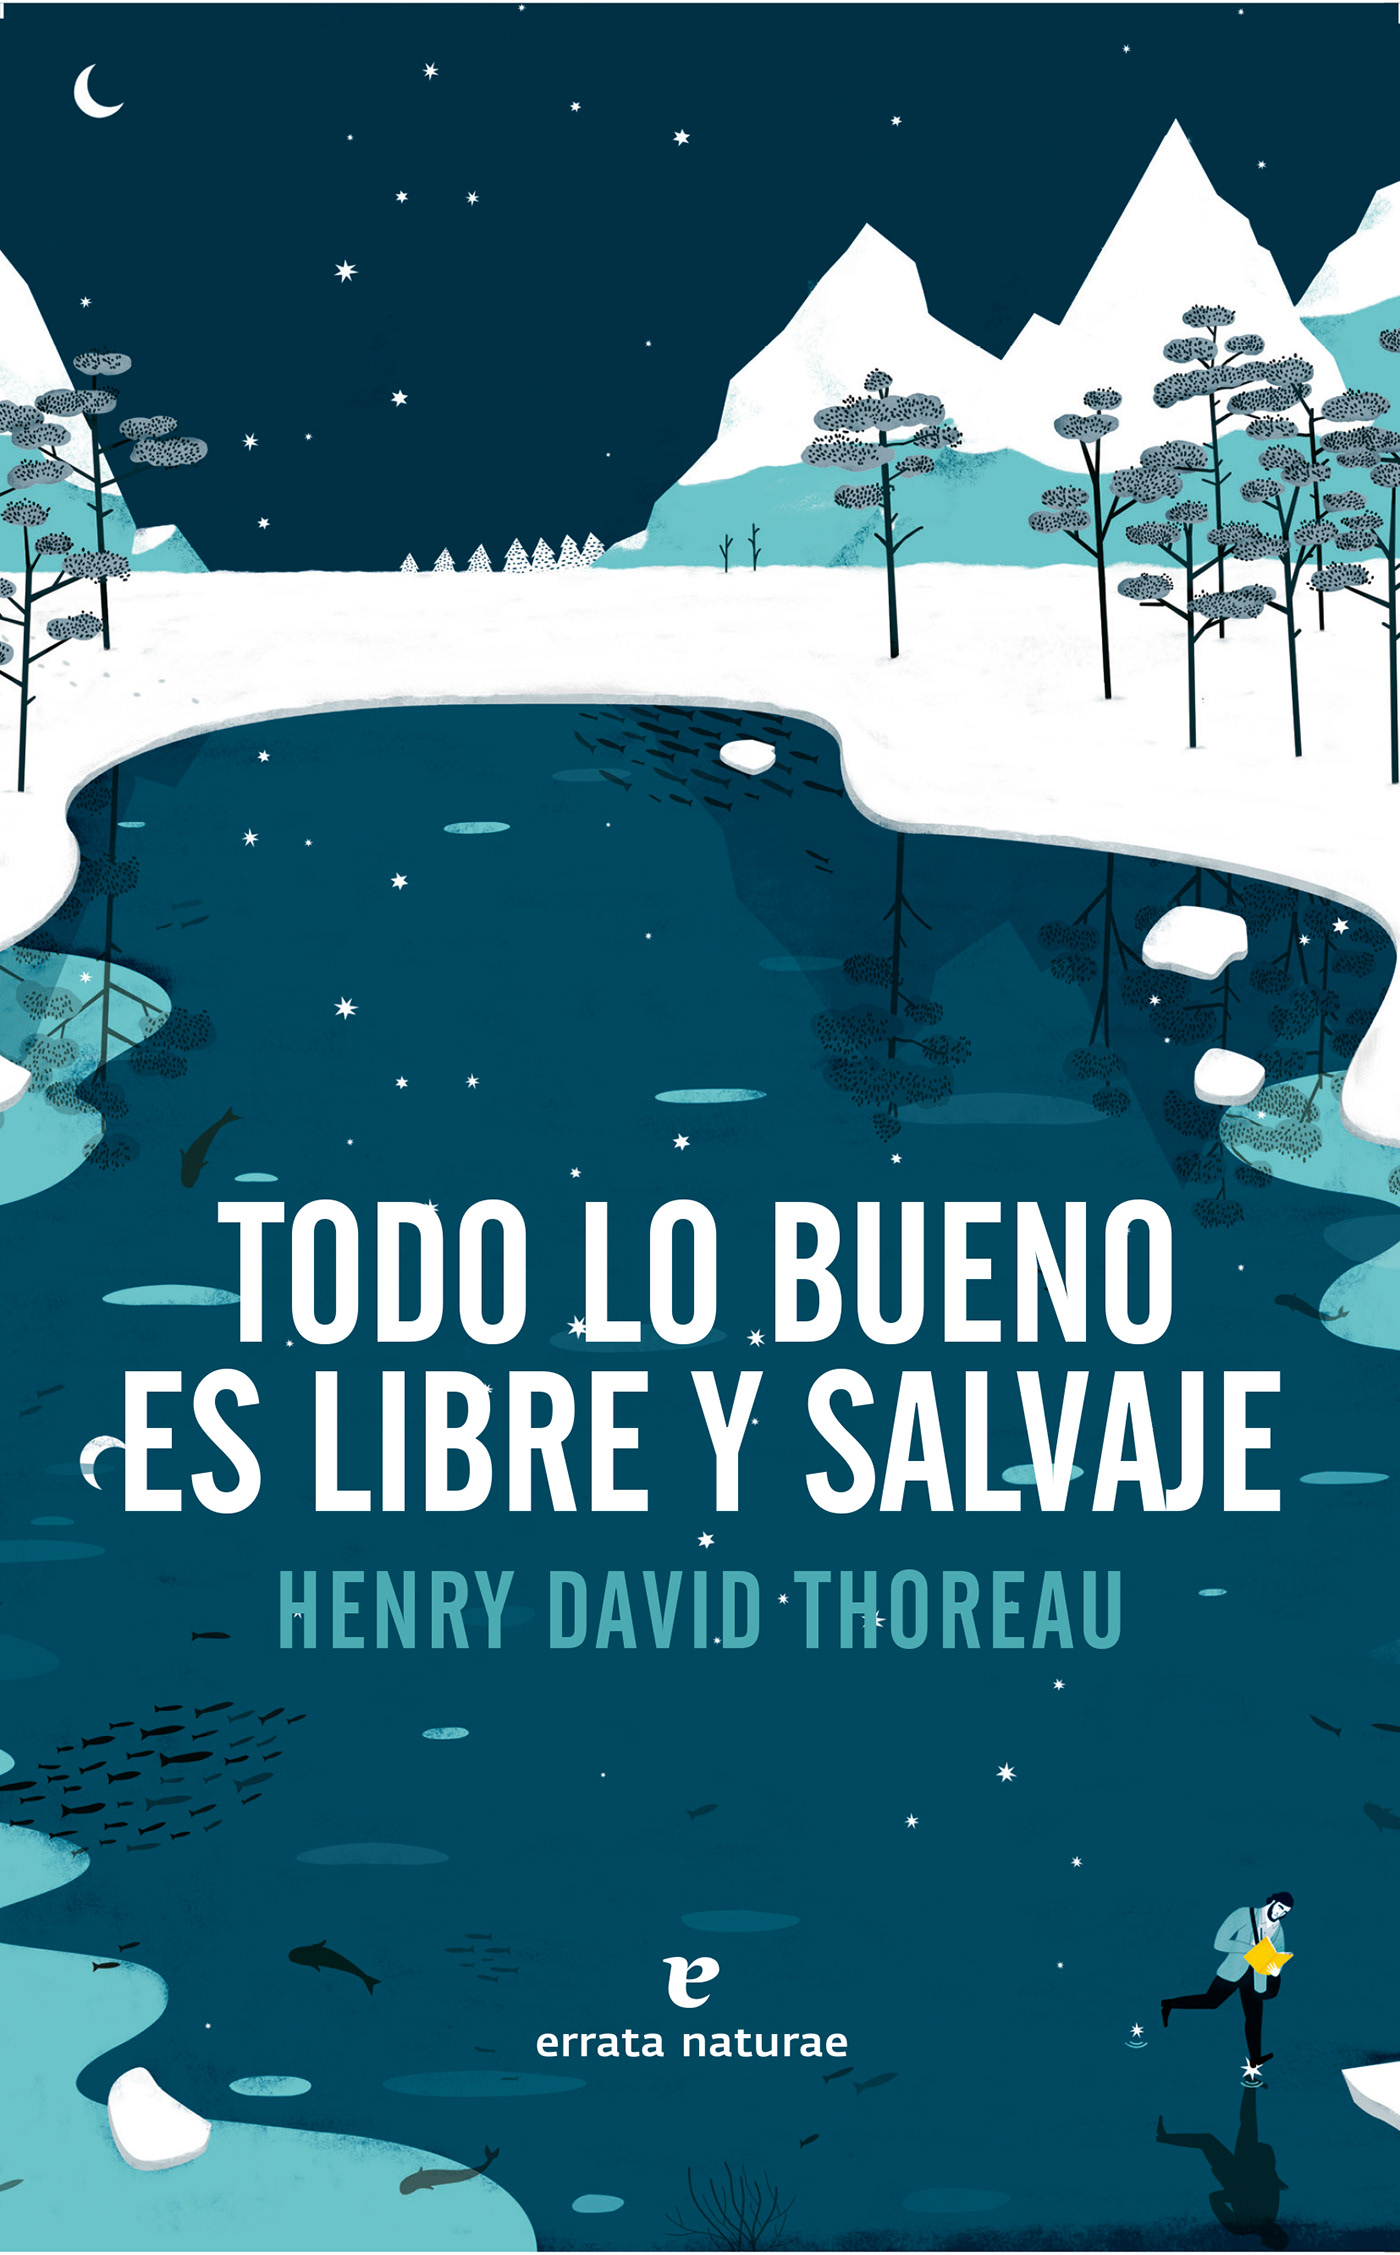 Henry David Thoreau thoreau walden Natalia Zaratiegui lake mountains errata naturae #book cover cover